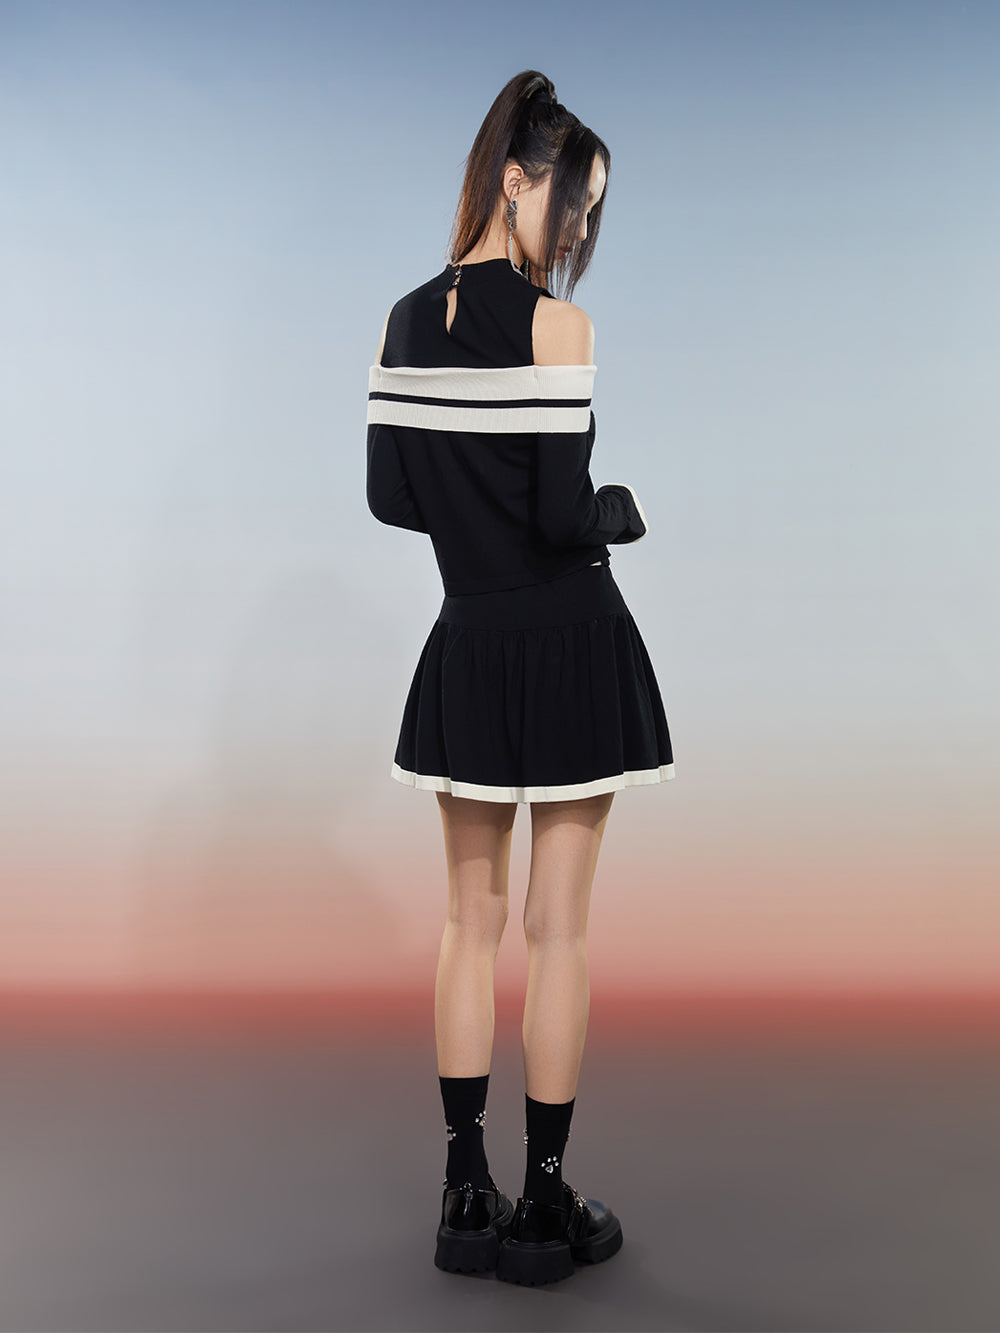 MUKZIN Slim-fitting Elegant Black Original Trendy Sweater